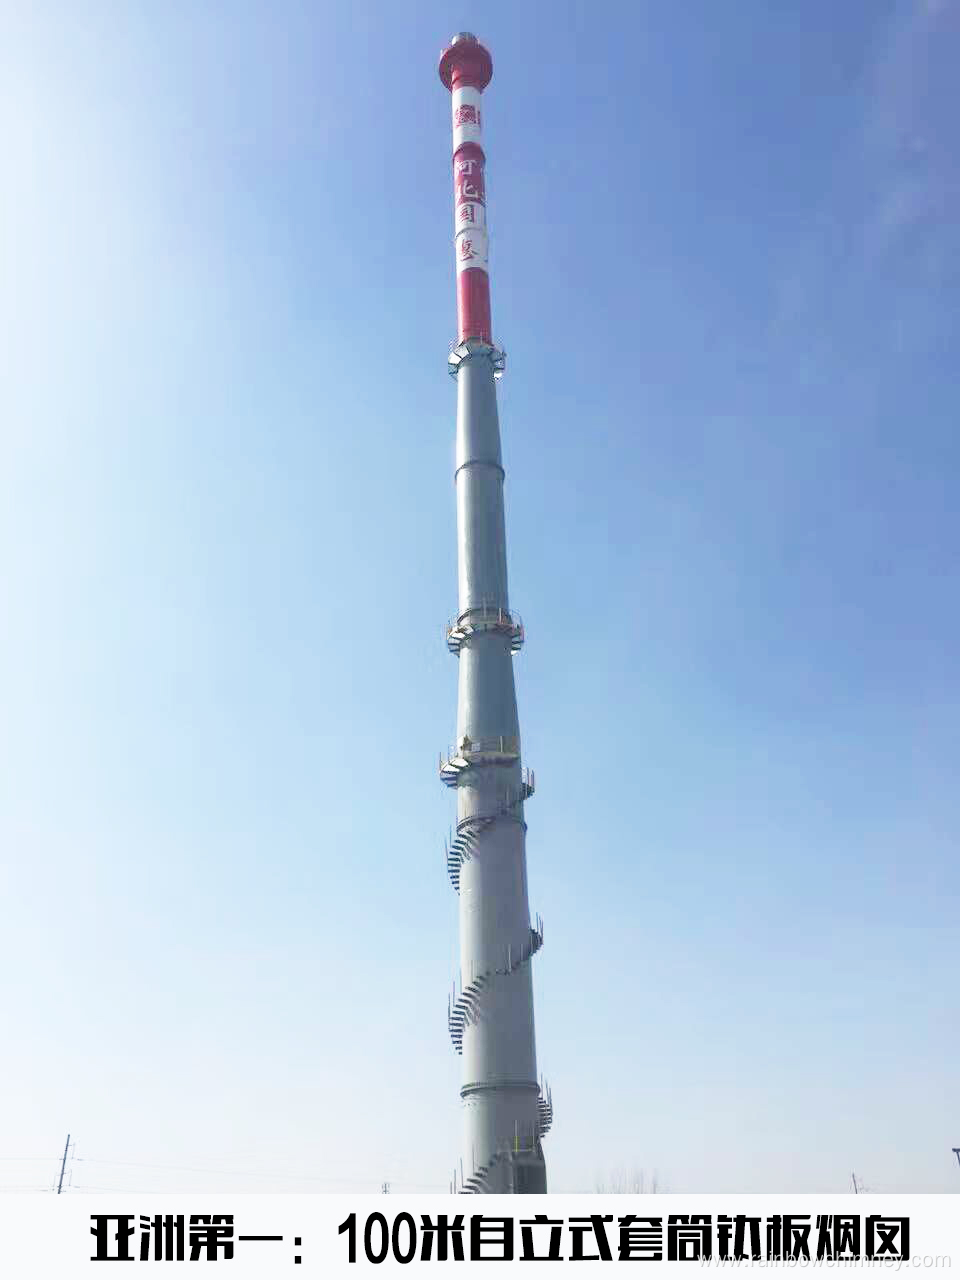 Steel mining plant stack chimney